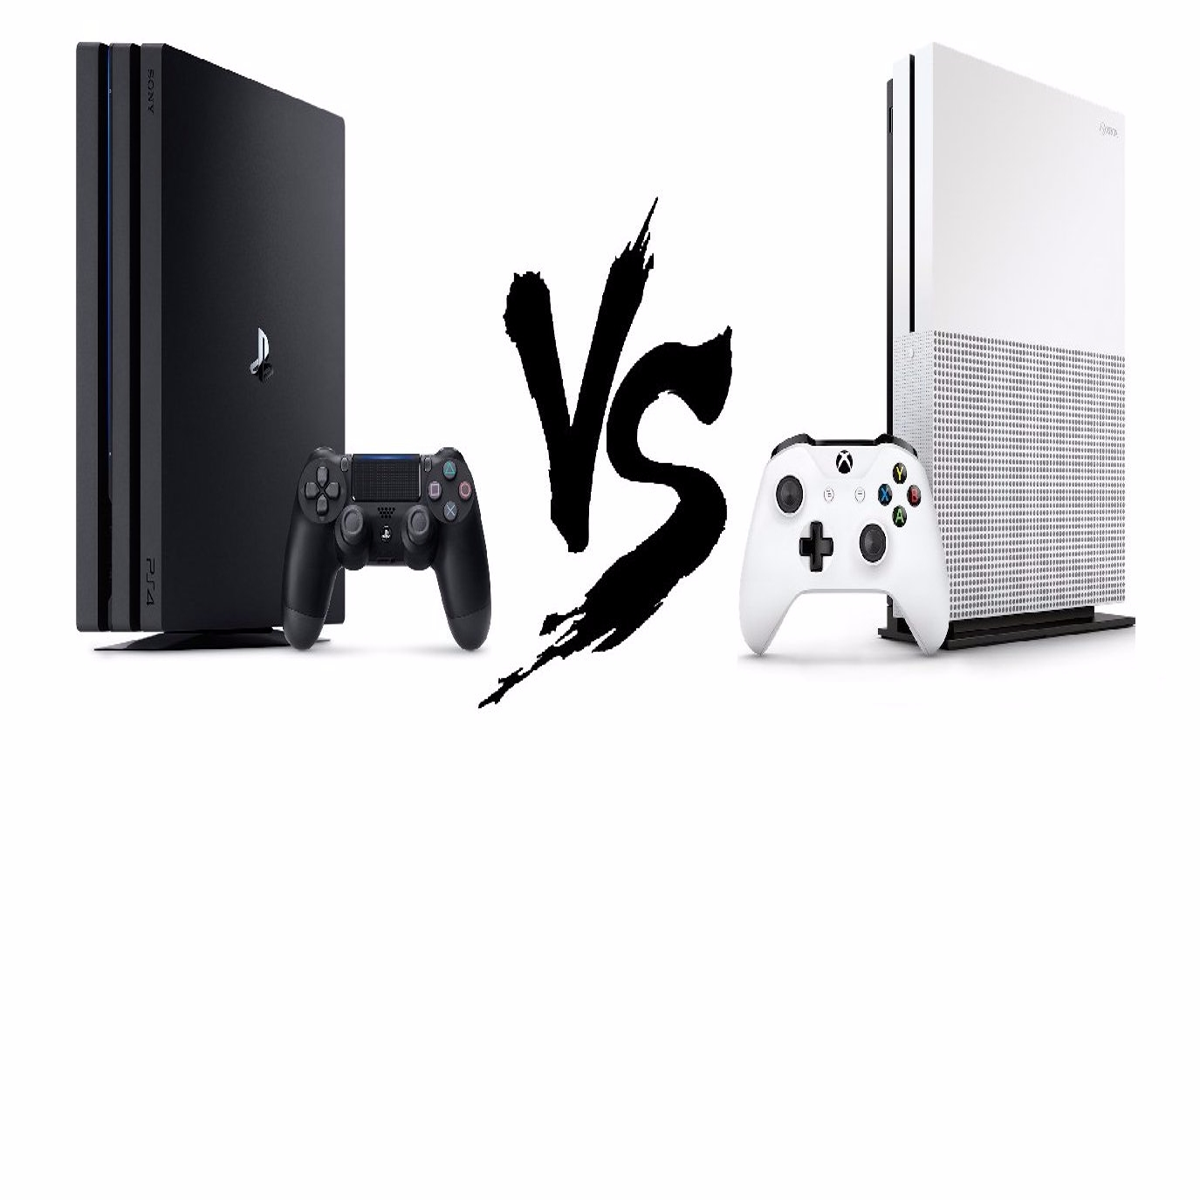 PS4 Pro ou Slim: qual comprar?